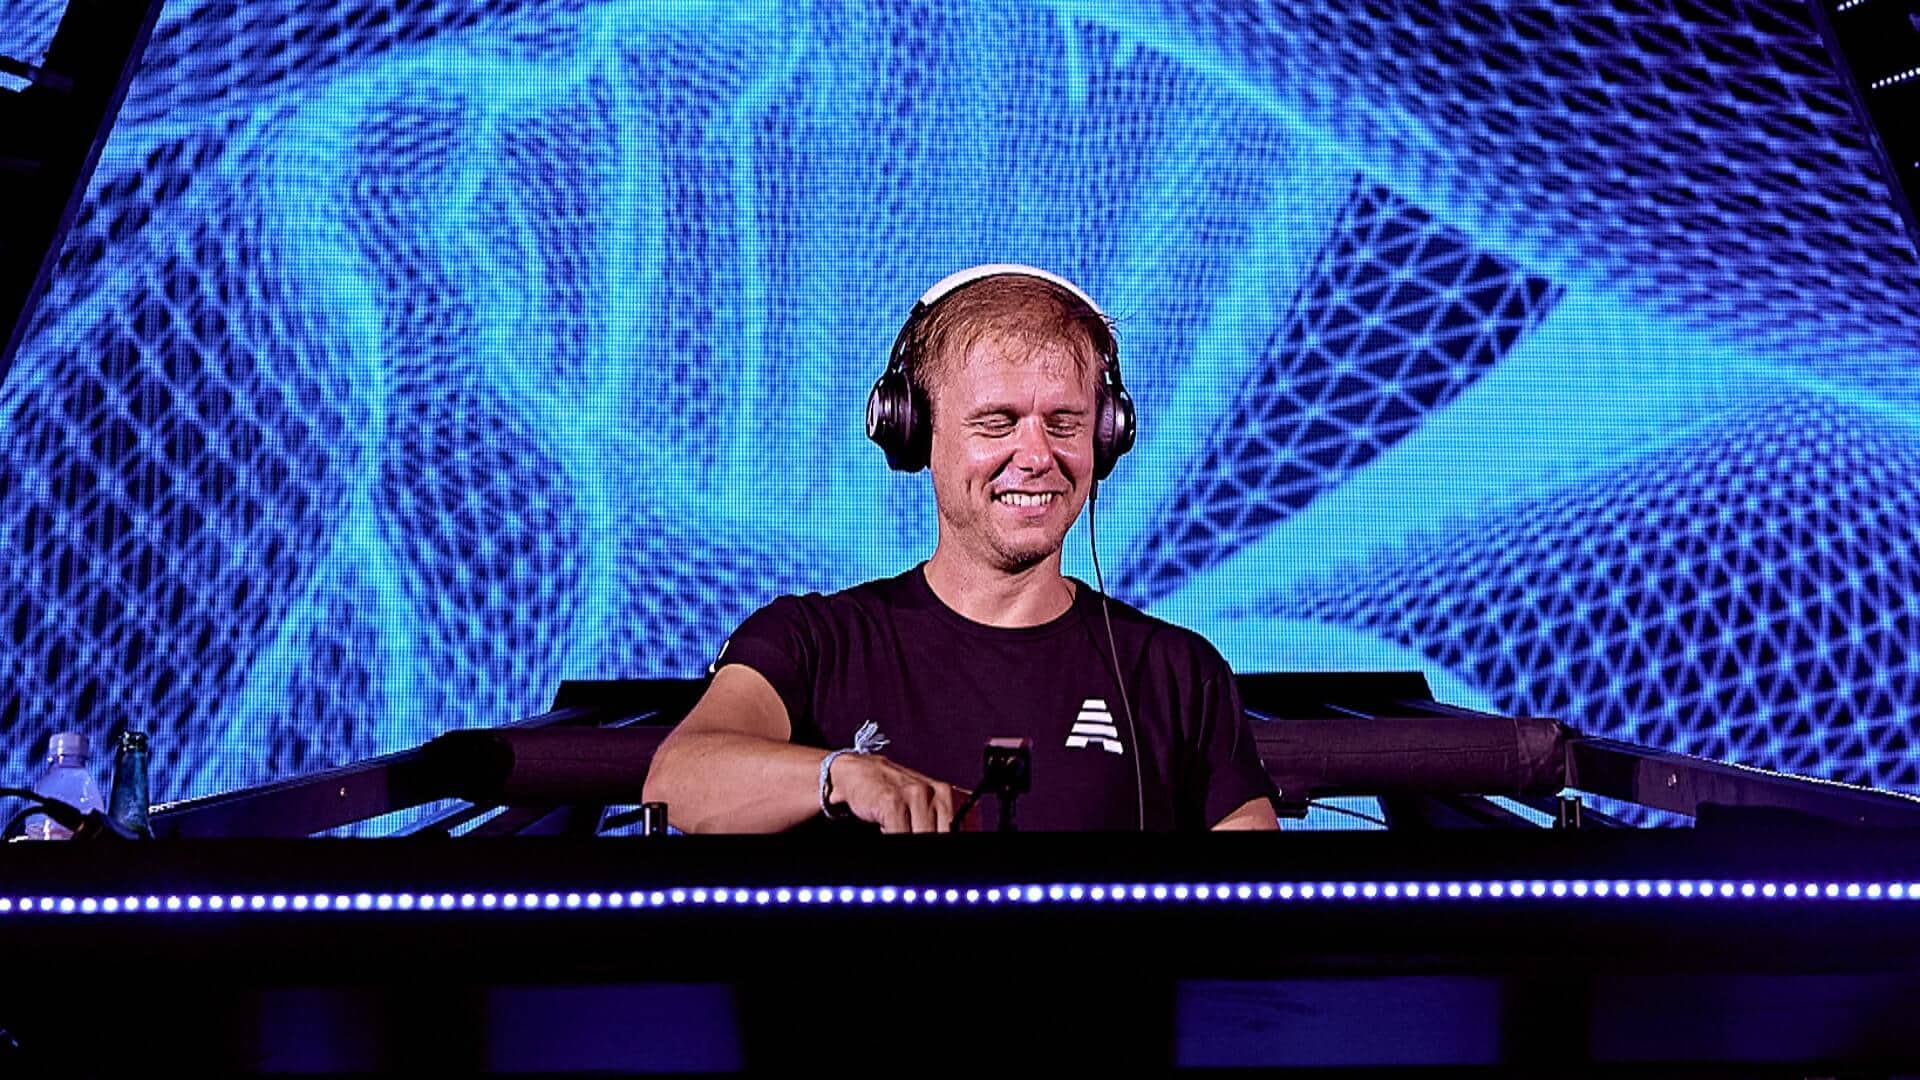 Armin van Buuren releases new single ‘Hey (I Miss You)' featuring Simon Ward: Listen